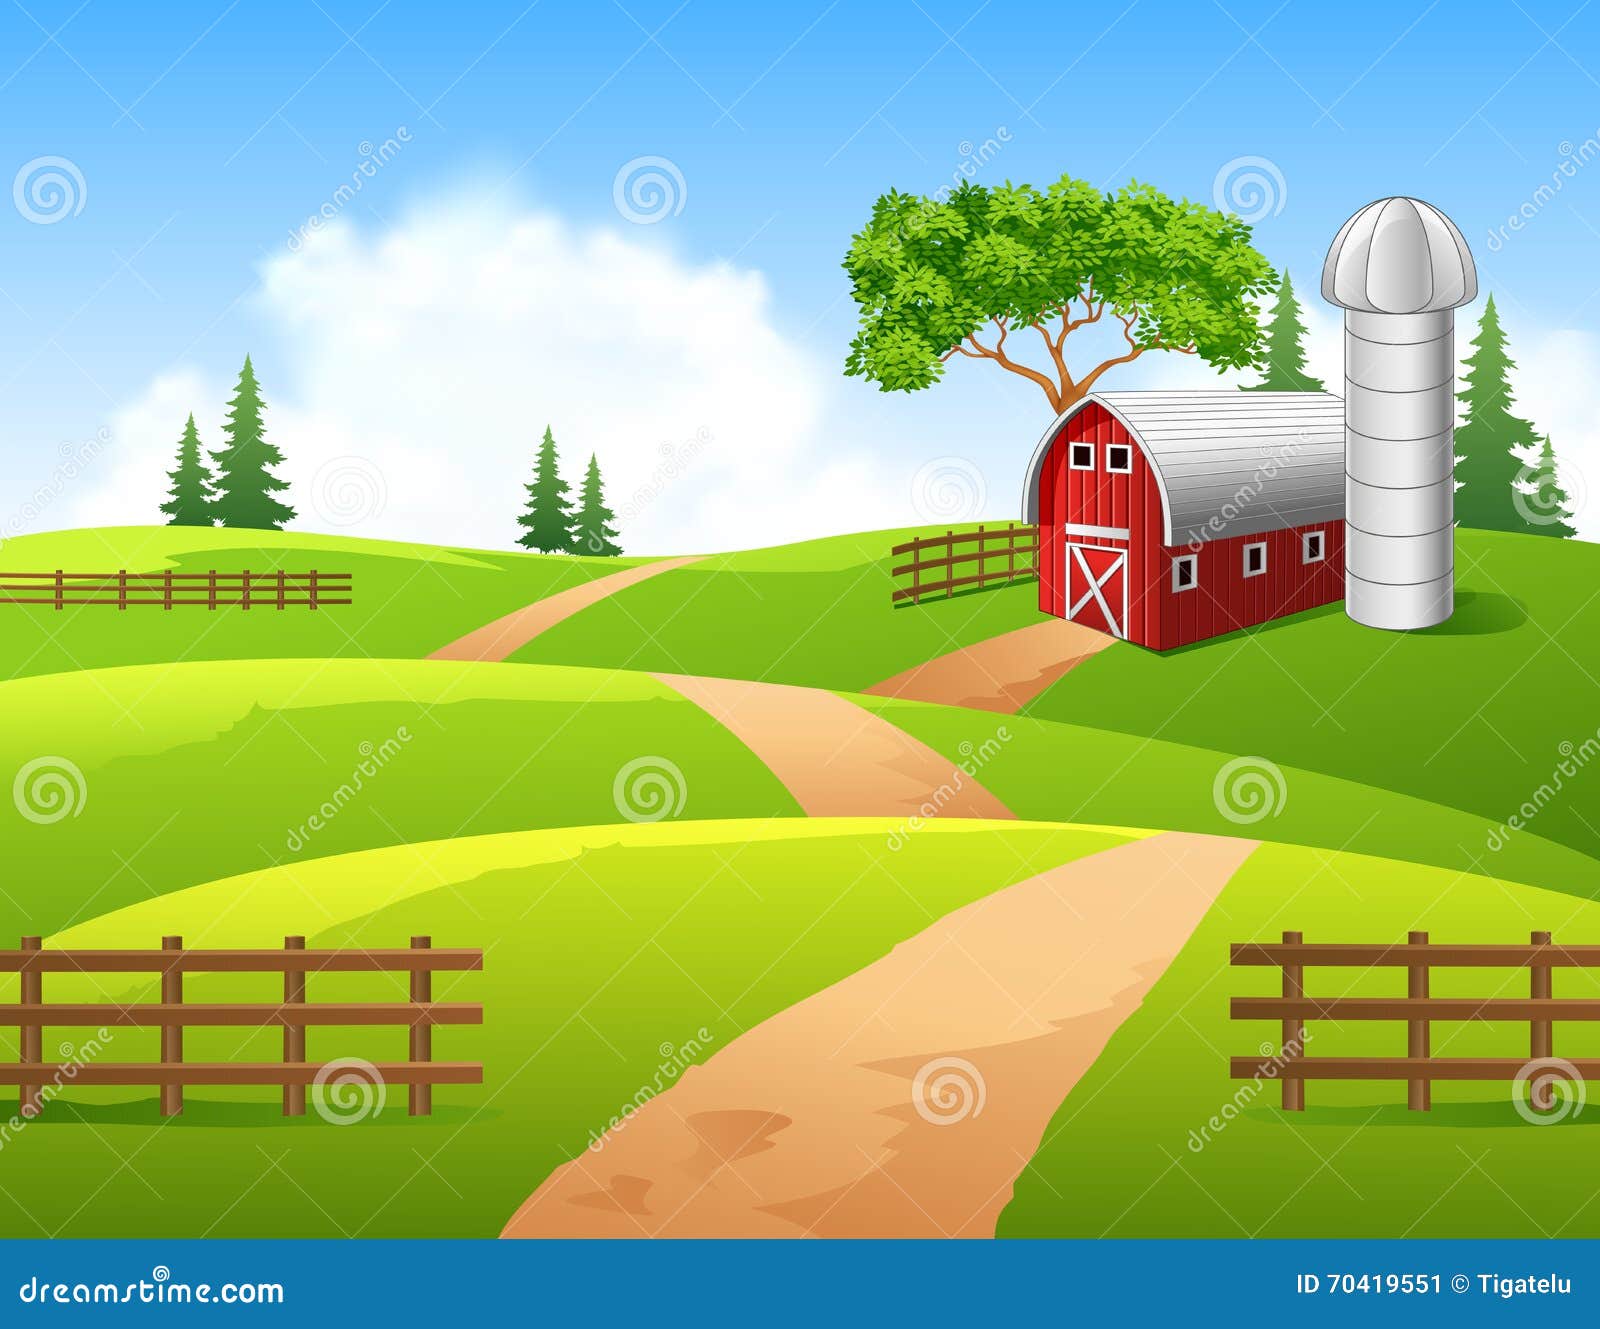 clipart farm background - photo #25